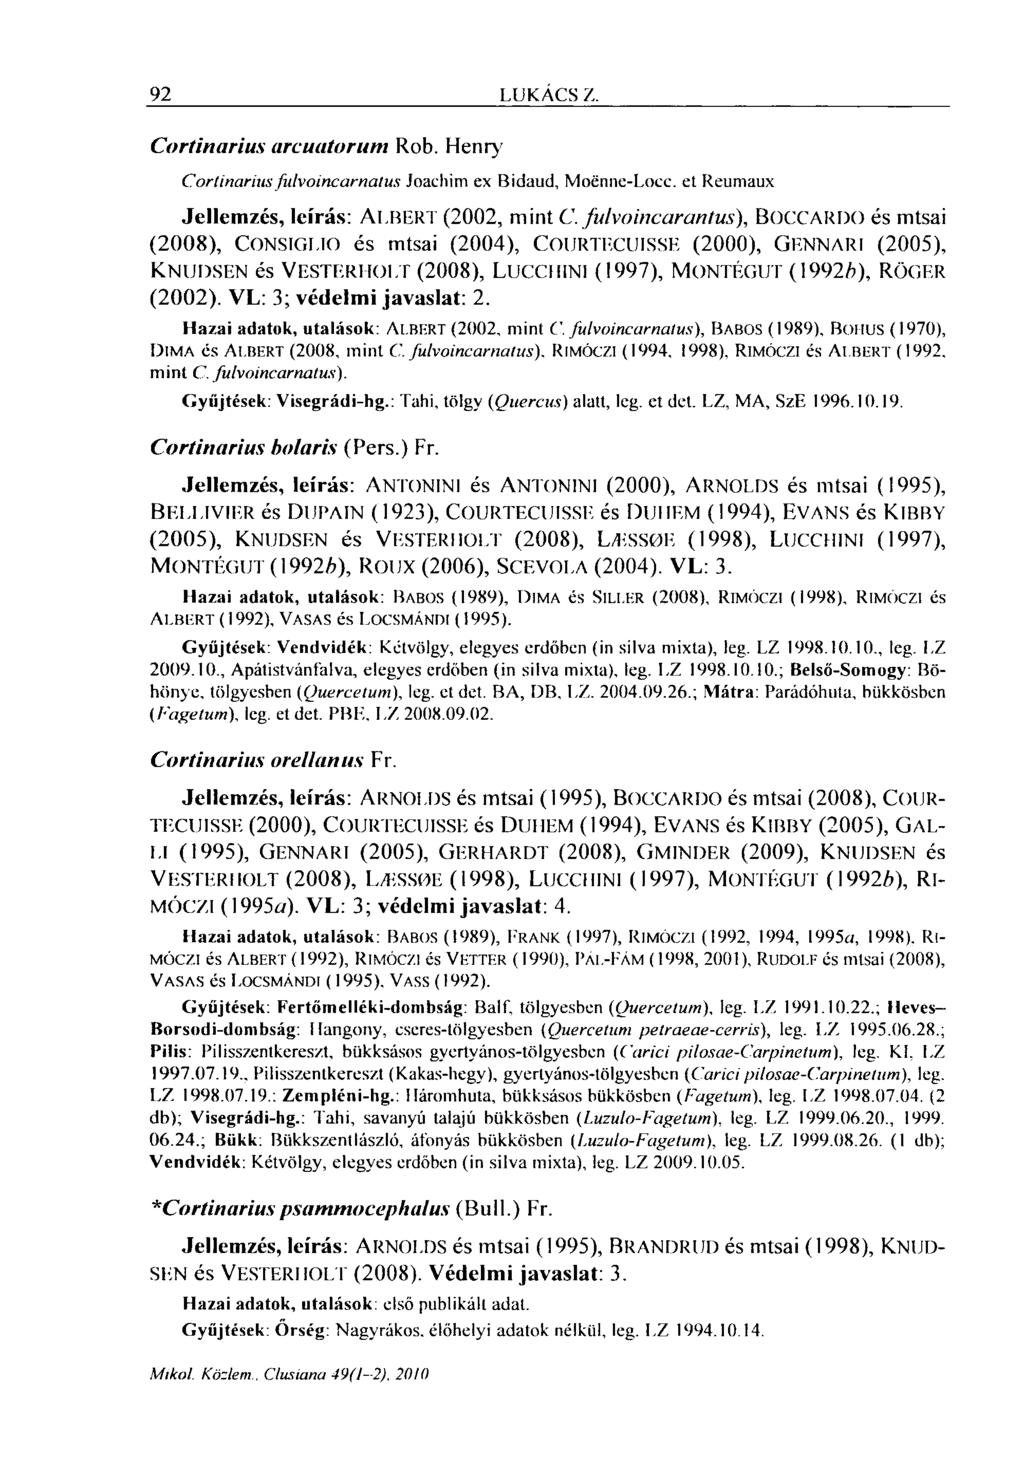 92 LUKÁCS Z. Cortinarius arcuatorum Cortinarius fulvoincarnatus Rob. Henry Joachim ex Bidaud, Moénne-Locc. et Reumaux Jellemzés, leírás: ALBERT (2002, mint C.